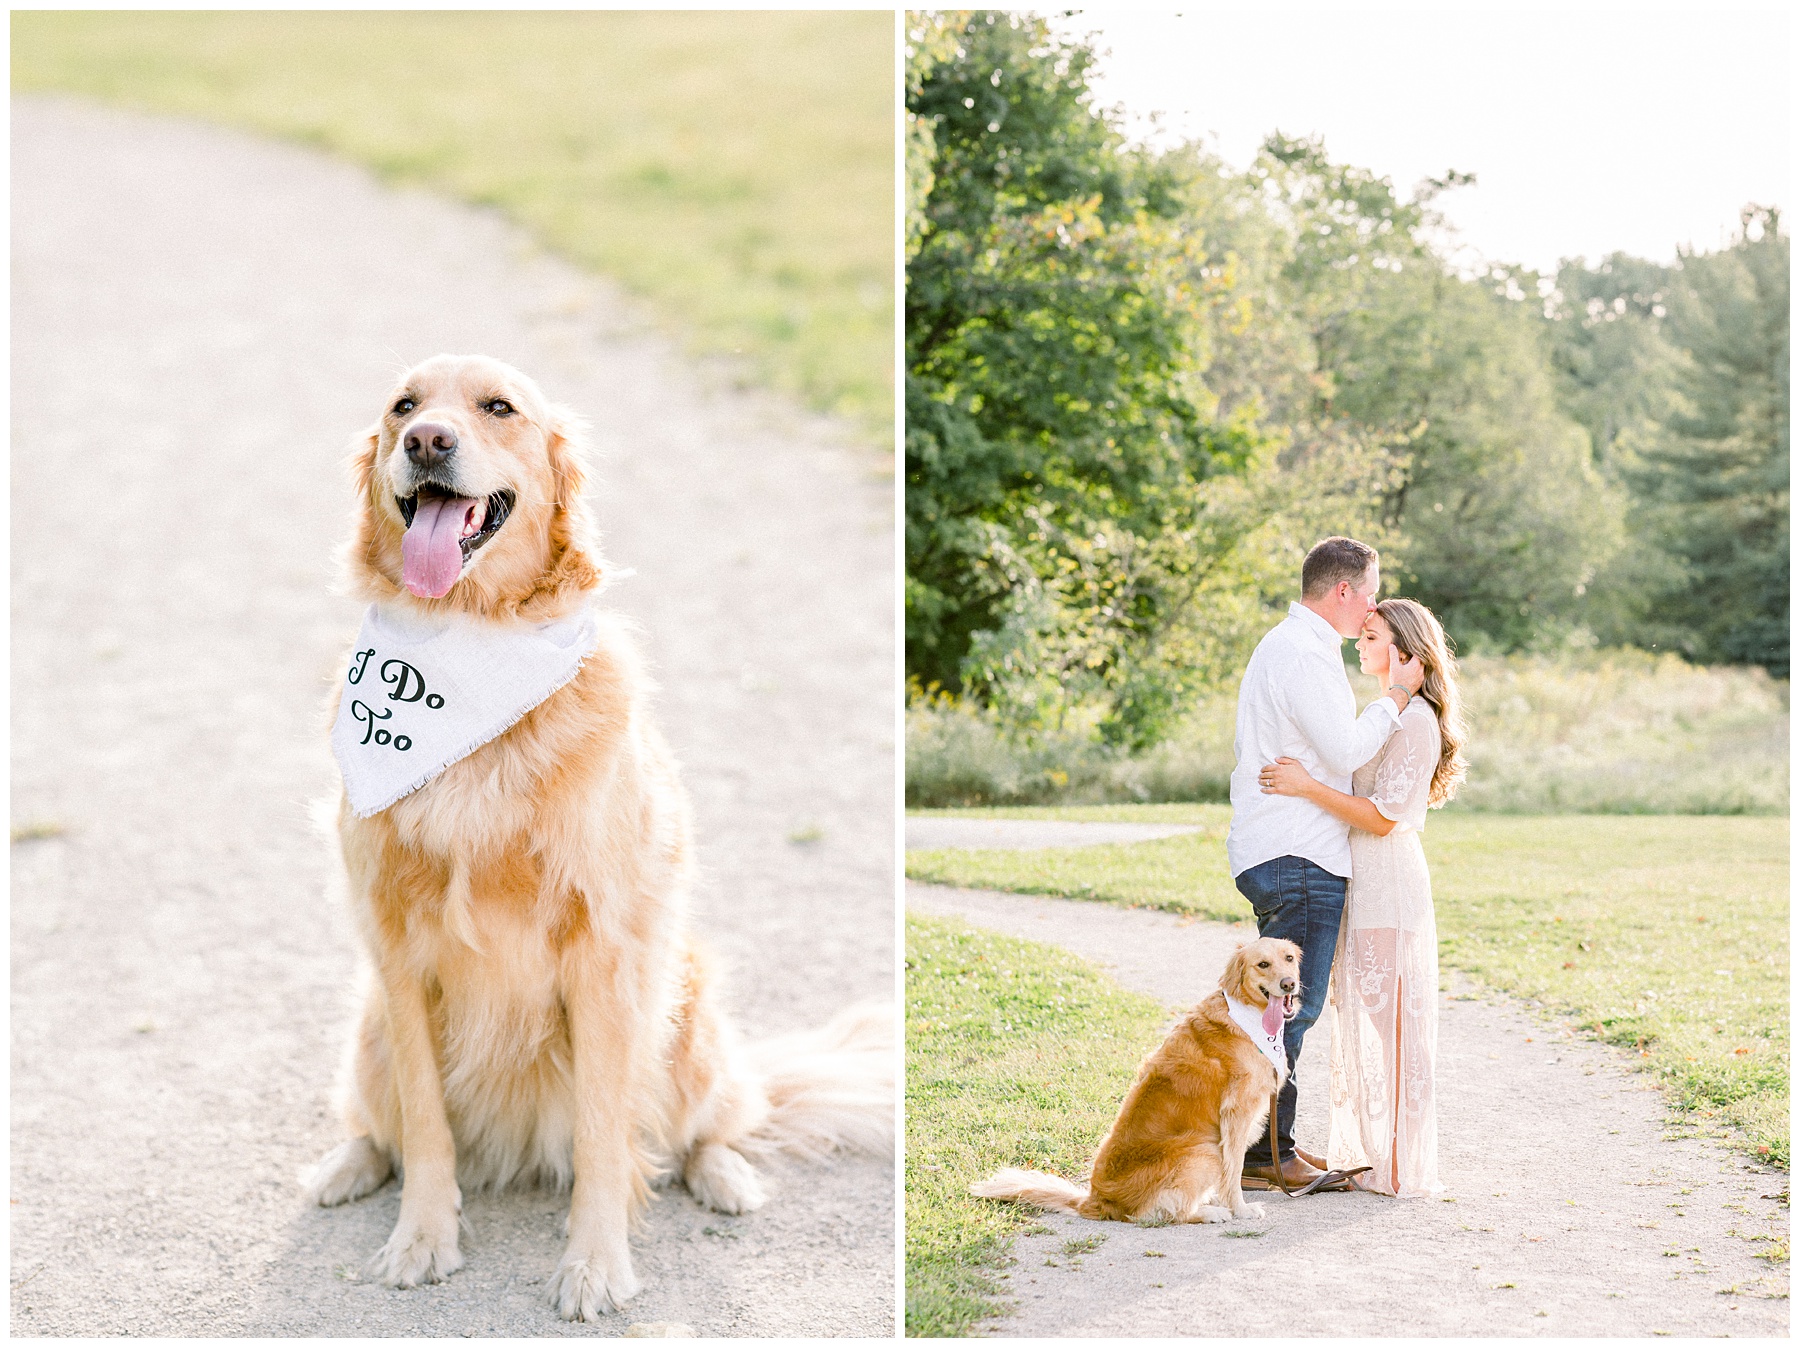 Hoover Reservoir Park Engagement Session by Amanda Eloise Photography. North Carolina Wedding Photographer. Engagement session with dog